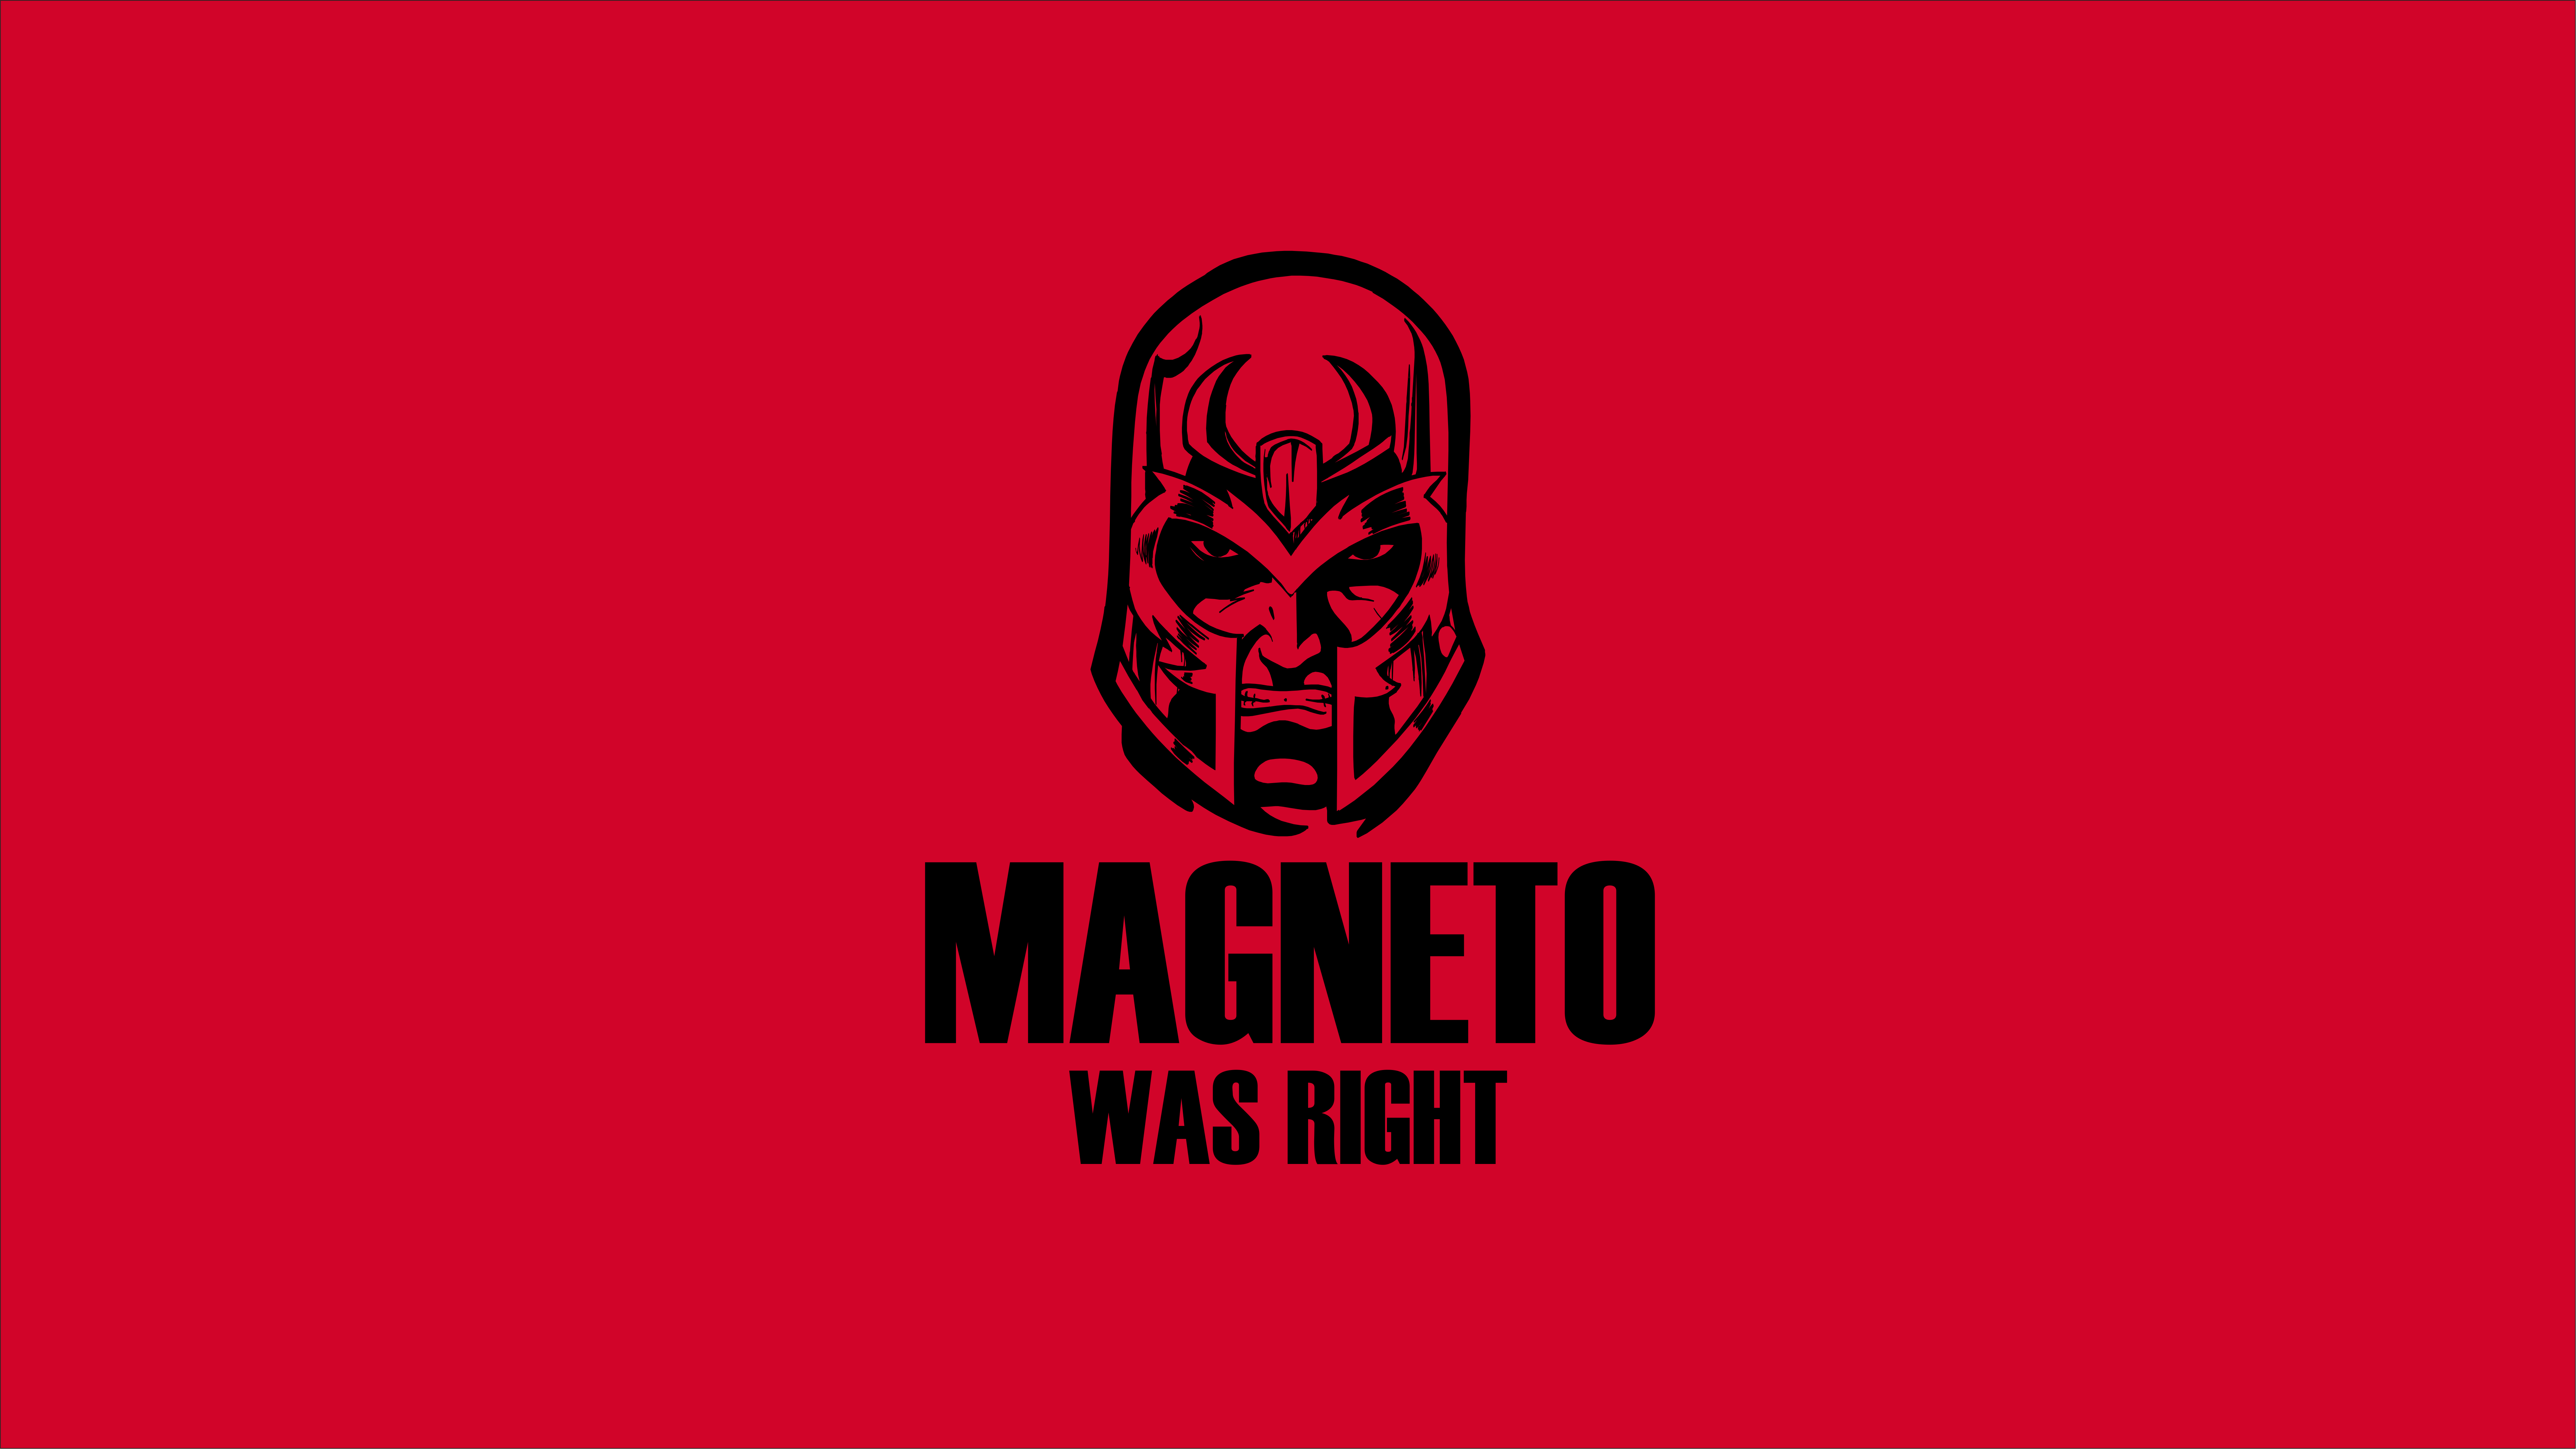 Magneto Marvel Comics Red 8005x4504